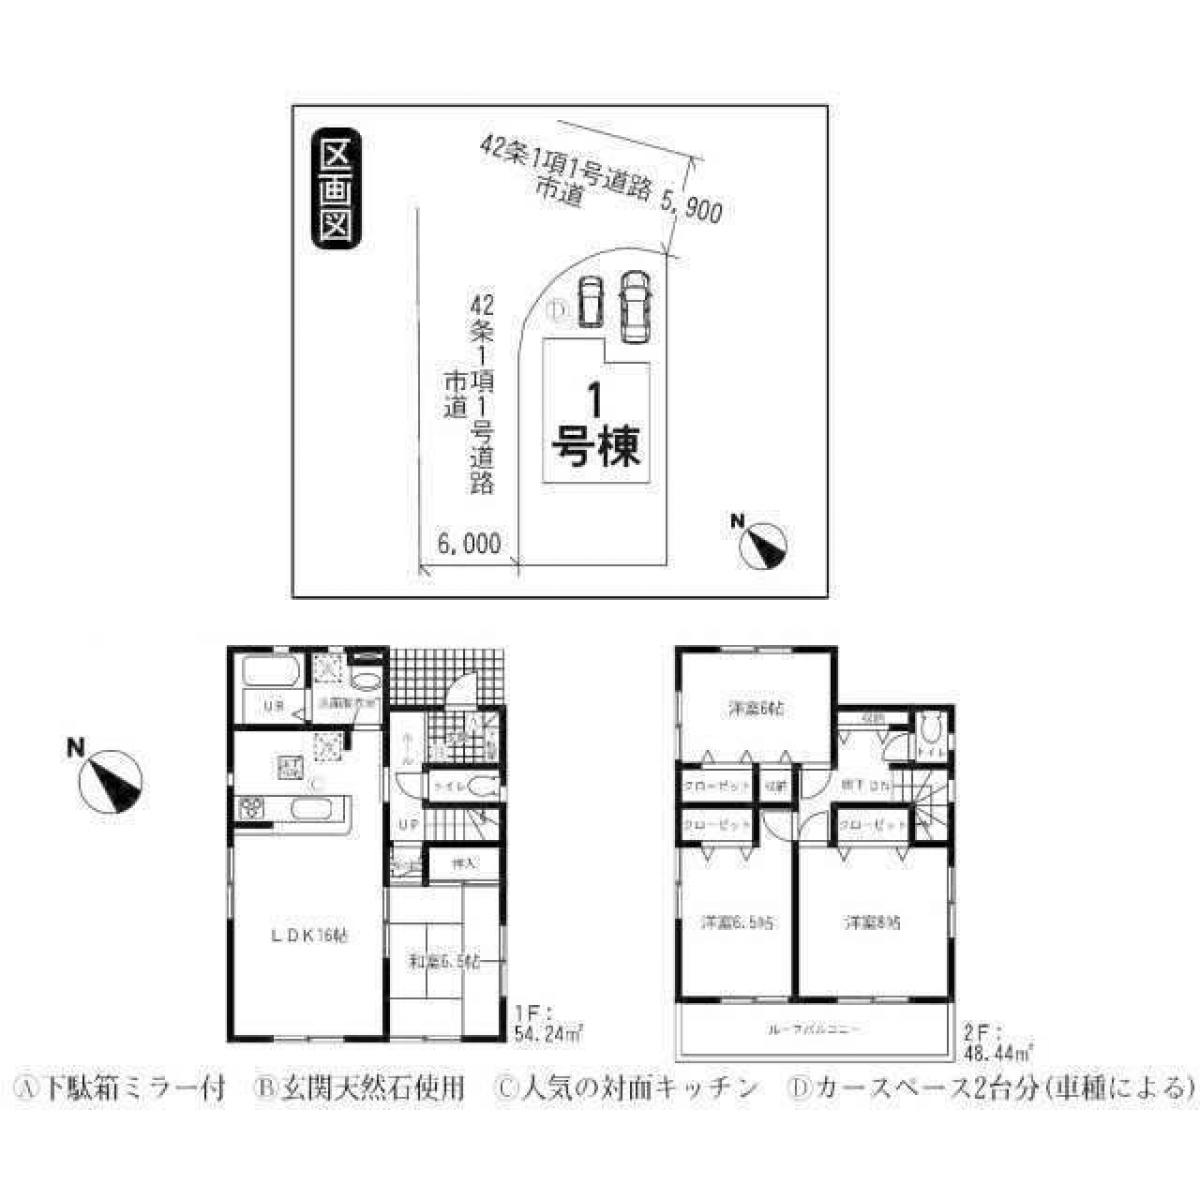 Picture of Home For Sale in Hasuda Shi, Saitama, Japan